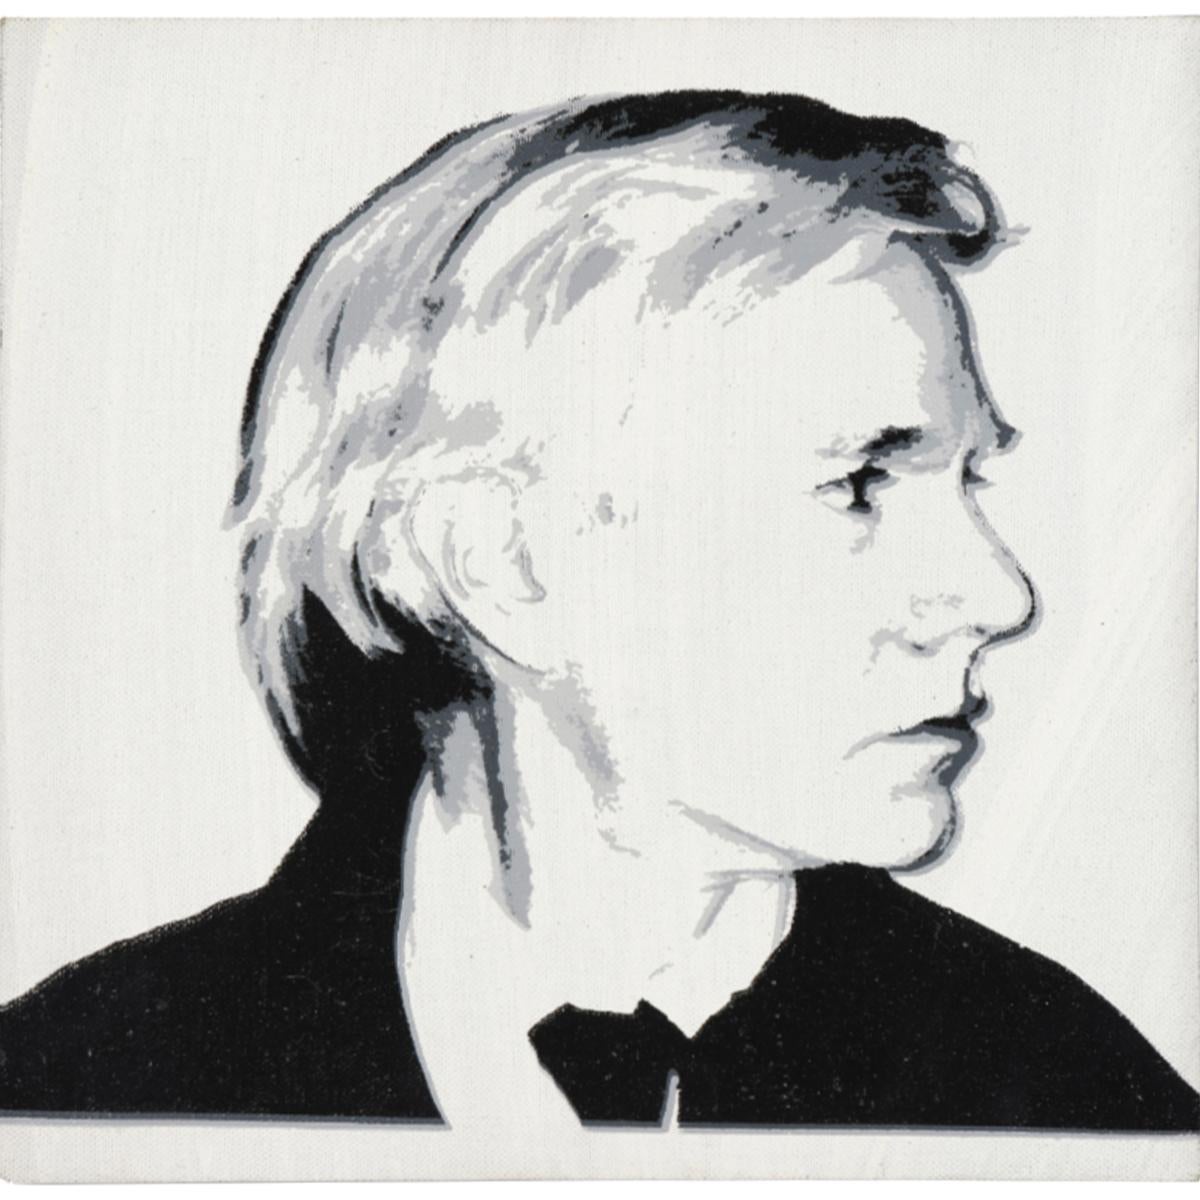 Andy Warhol Portrait Painting - Self-Portrait (Painting)